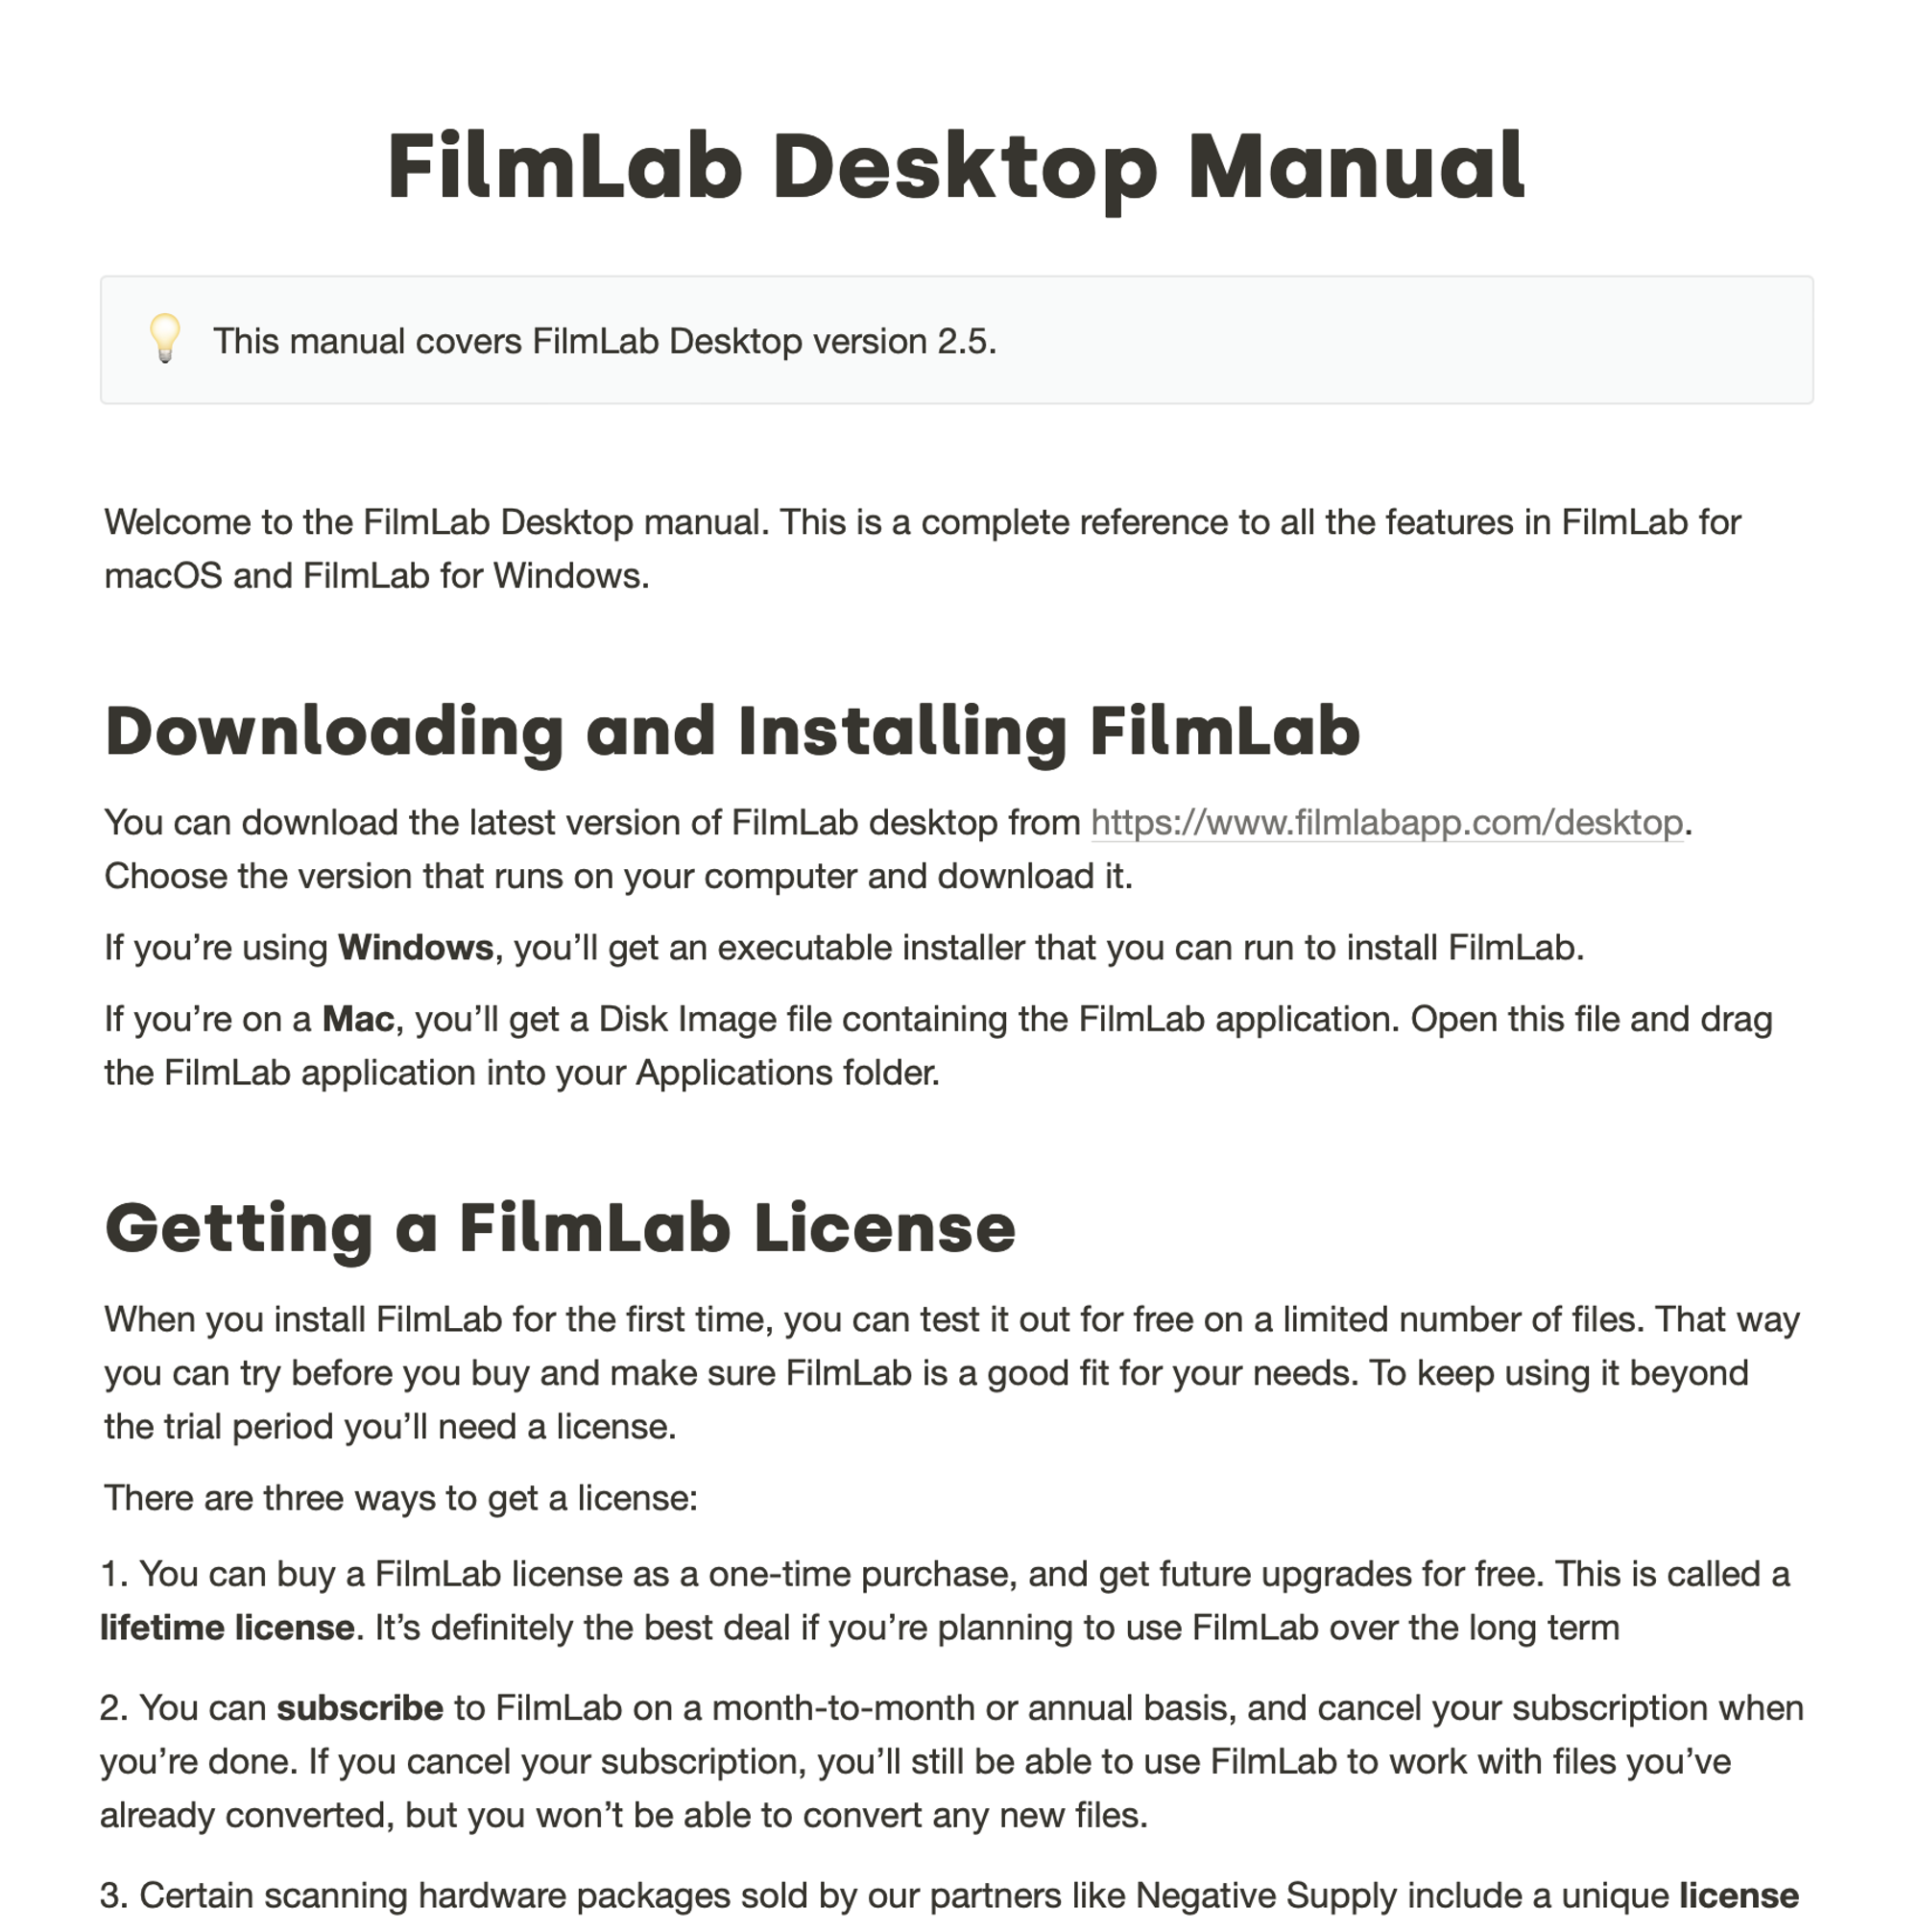 FilmLab finally has a manual!